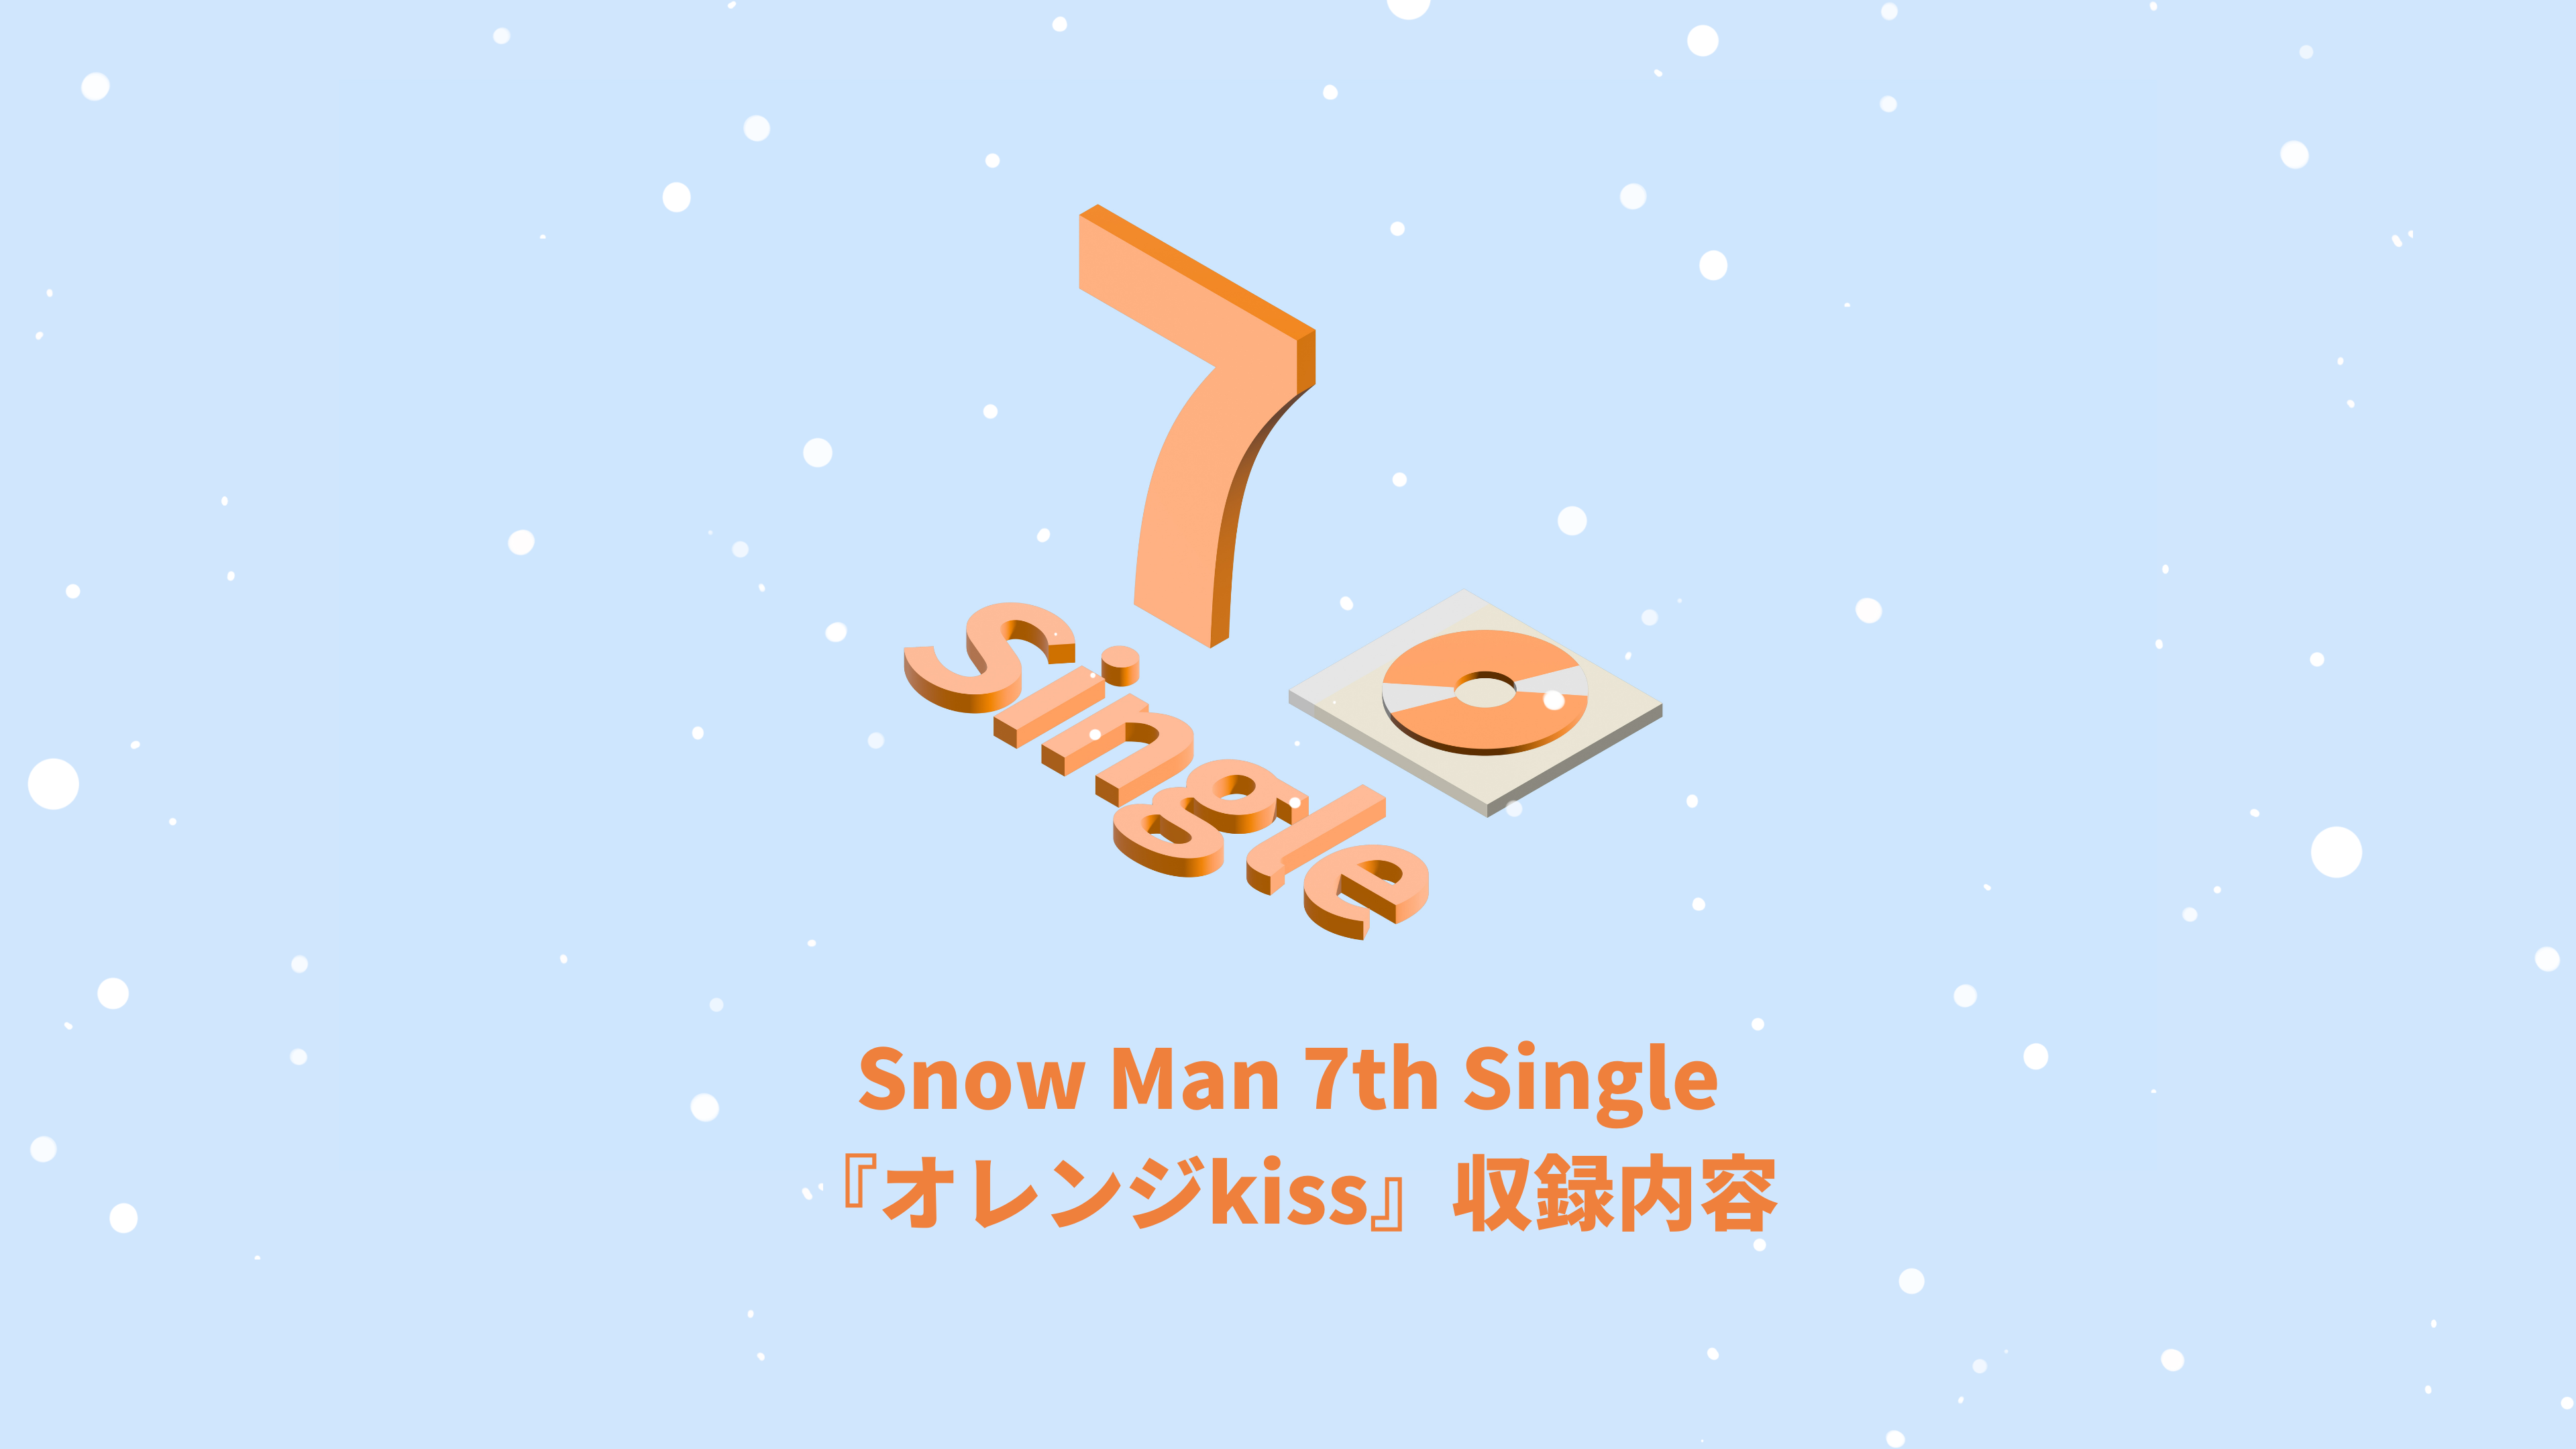 Snow Man 7th Single『オレンジkiss』収録内容 | 推し活サポ